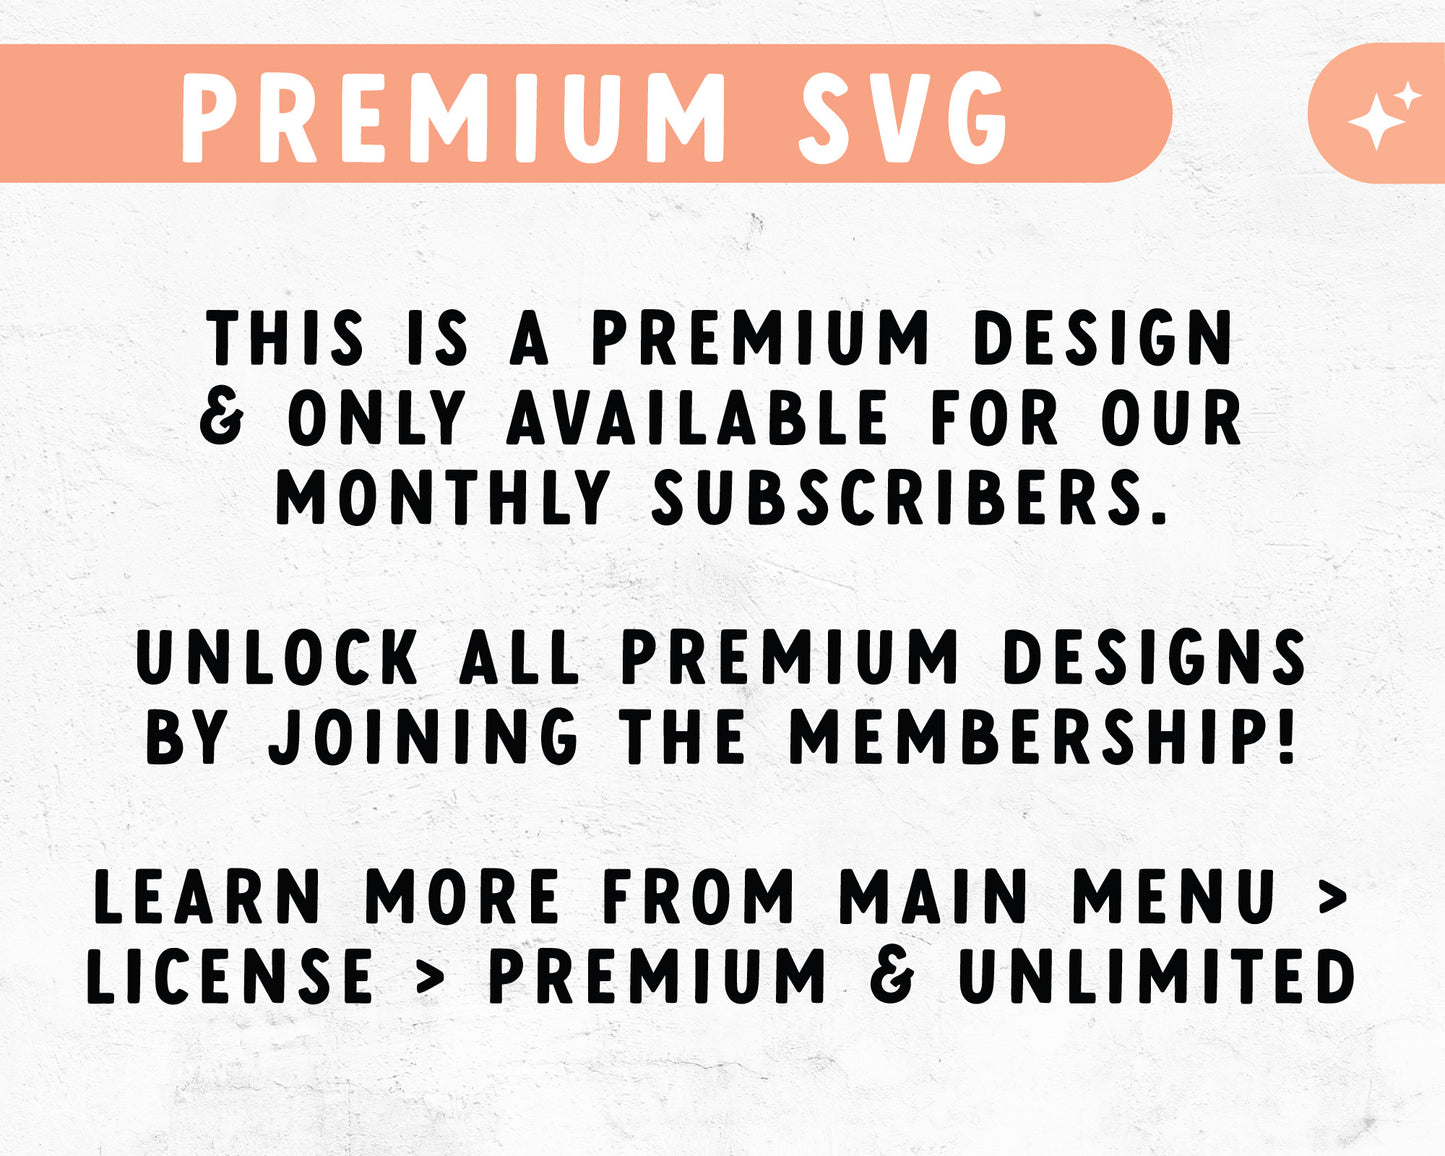 [ Premium ] Yin Yang Starbucks Wrap SVG With Hole for Logo